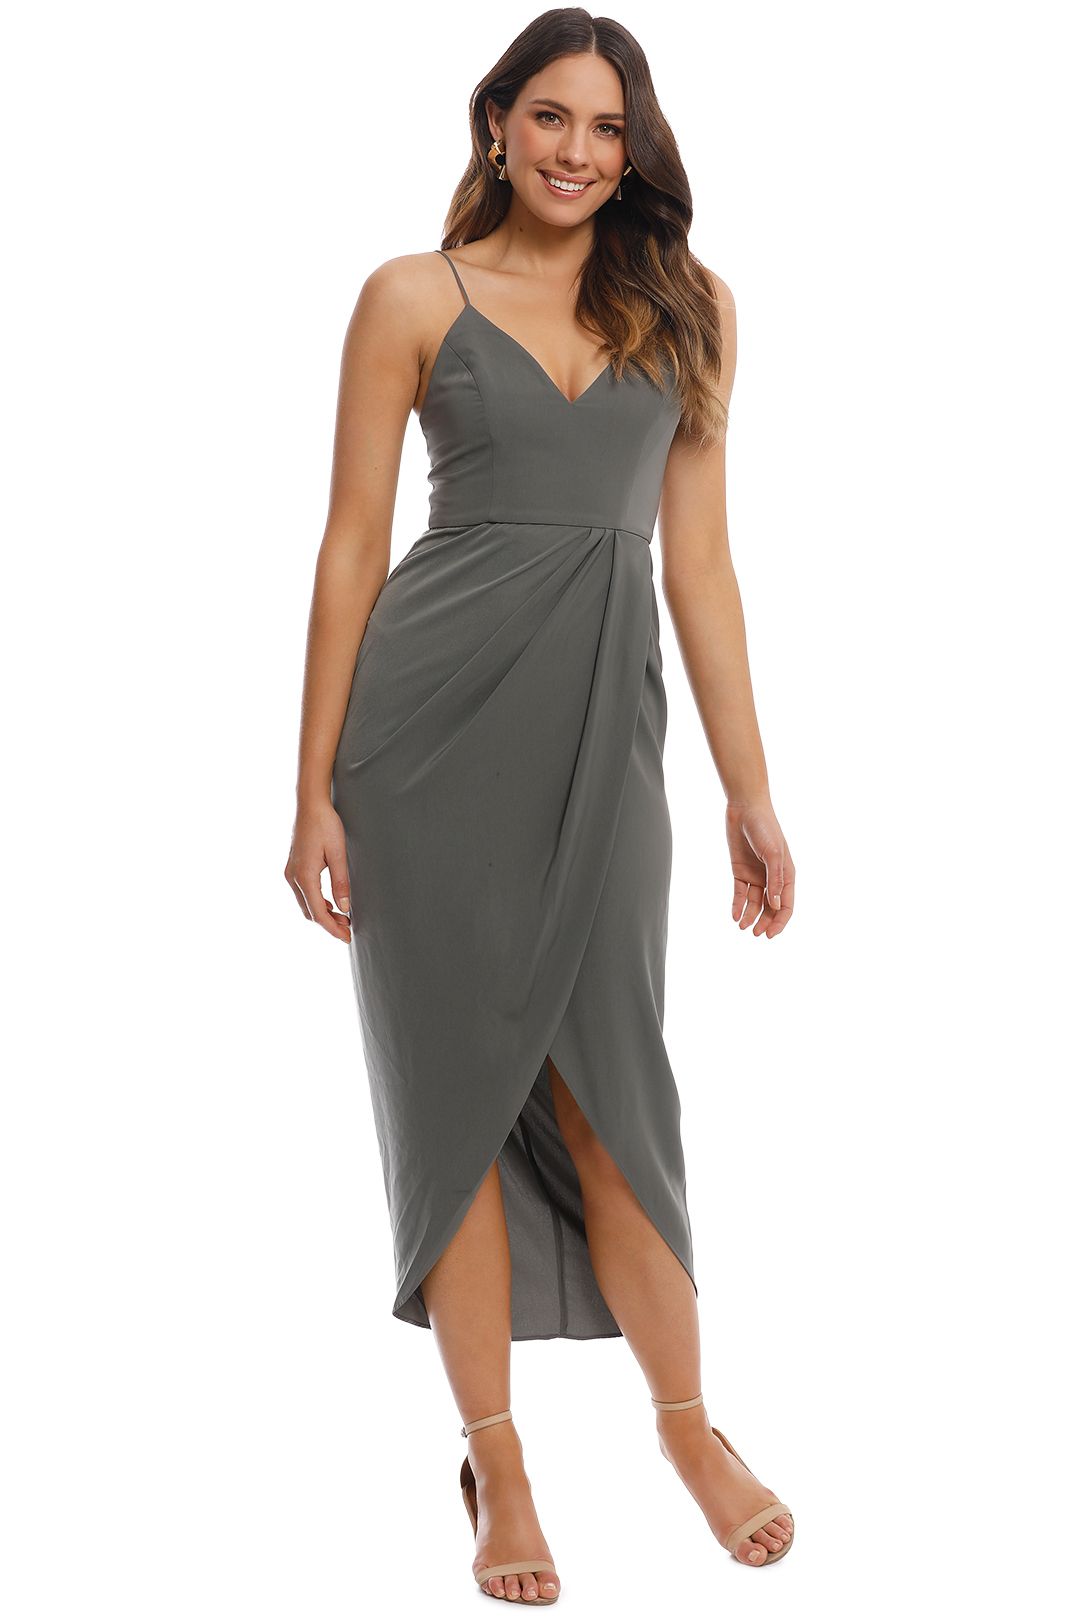 FShona Joy - Cocktail Draped Maxi Dress - Olive - Front